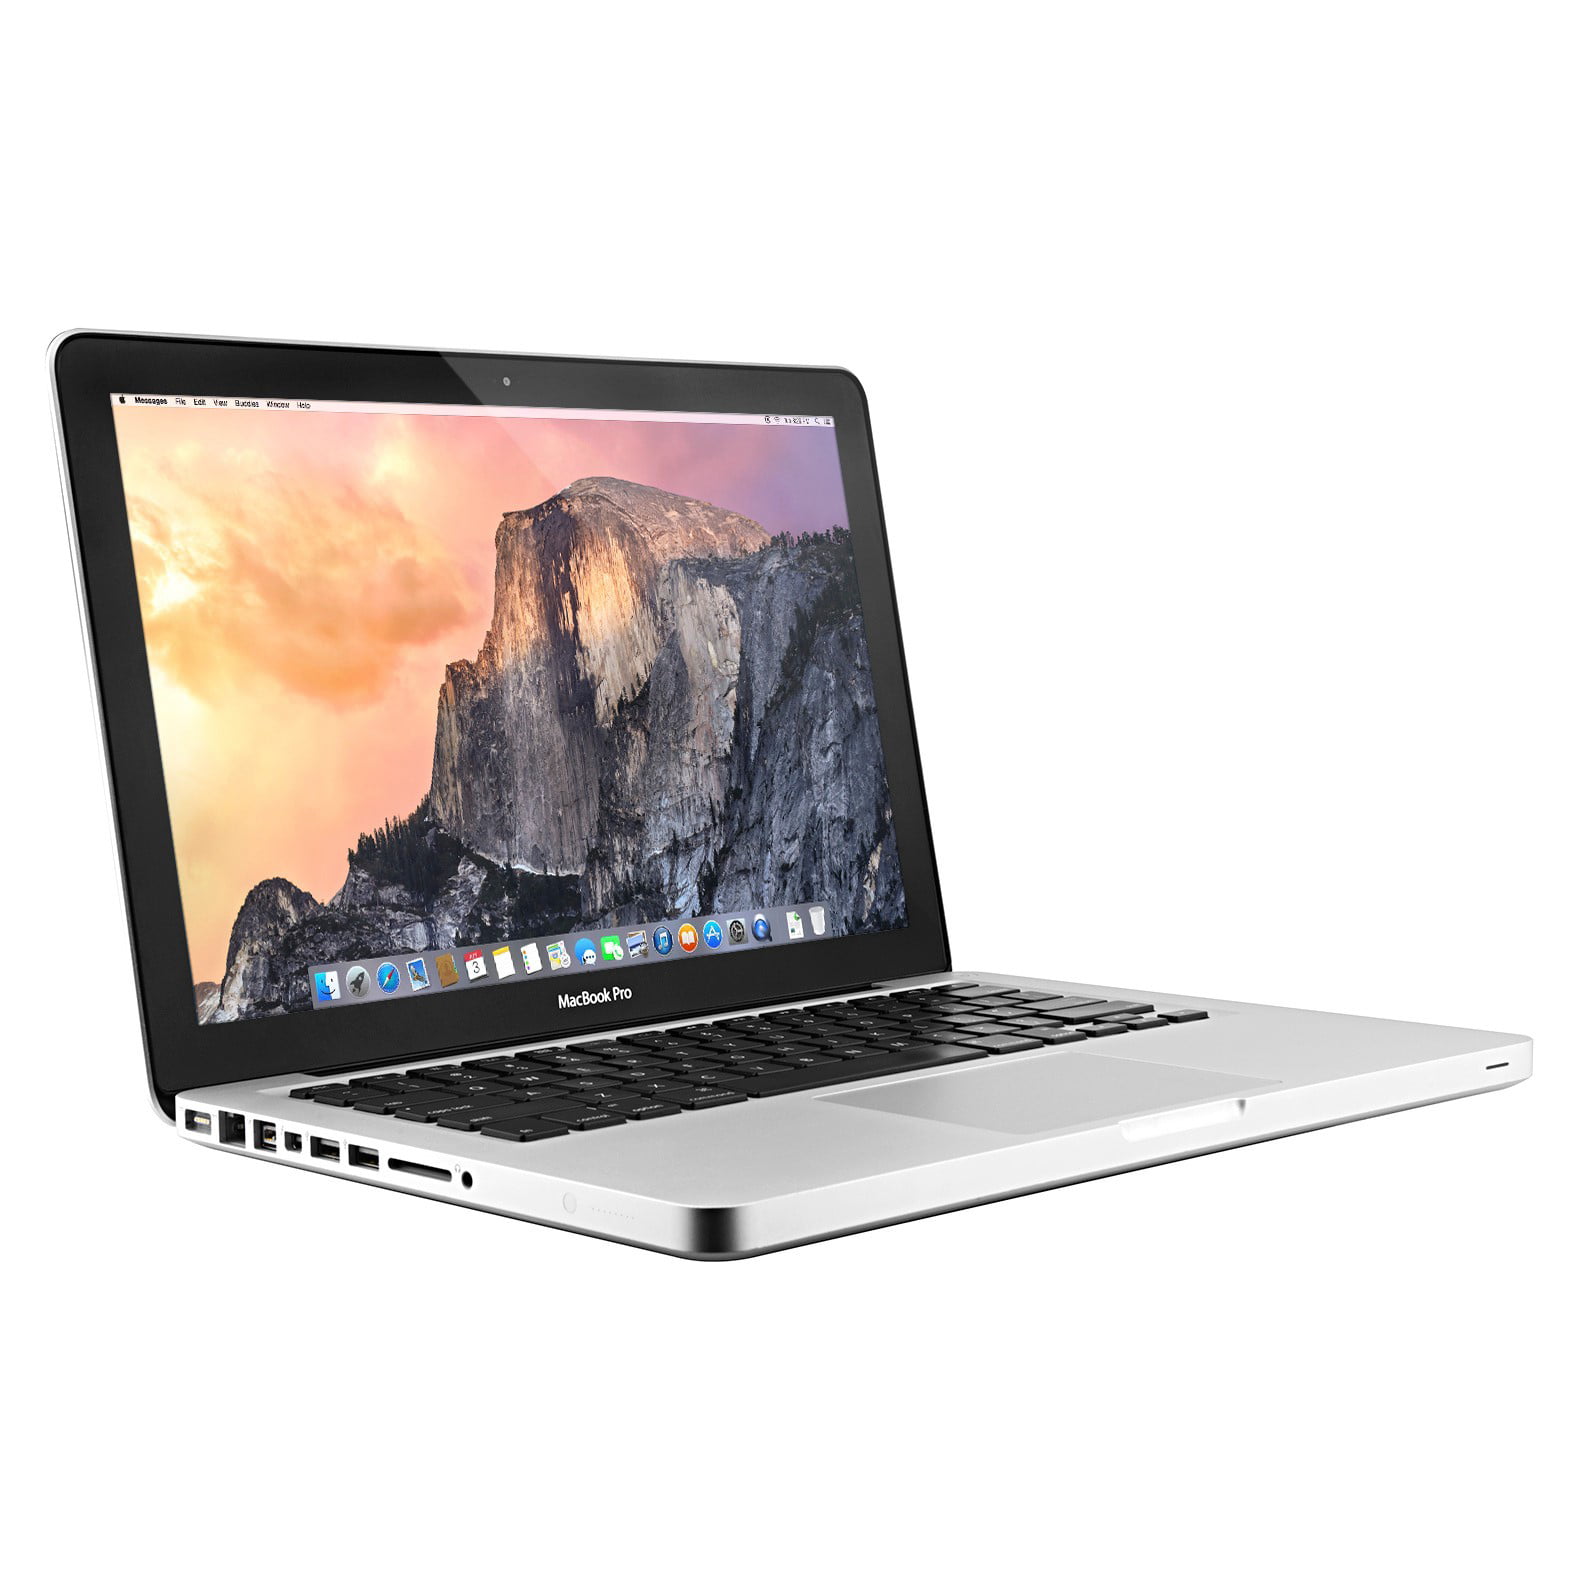 fodbold Grape Betinget Apple MacBook Pro 13.3" MD102LL/A Mid 2012 - 8GB RAM - 750GB HDD - 2.9GHz  Intel Core i7-3520M (Scratch and Dent) - Walmart.com